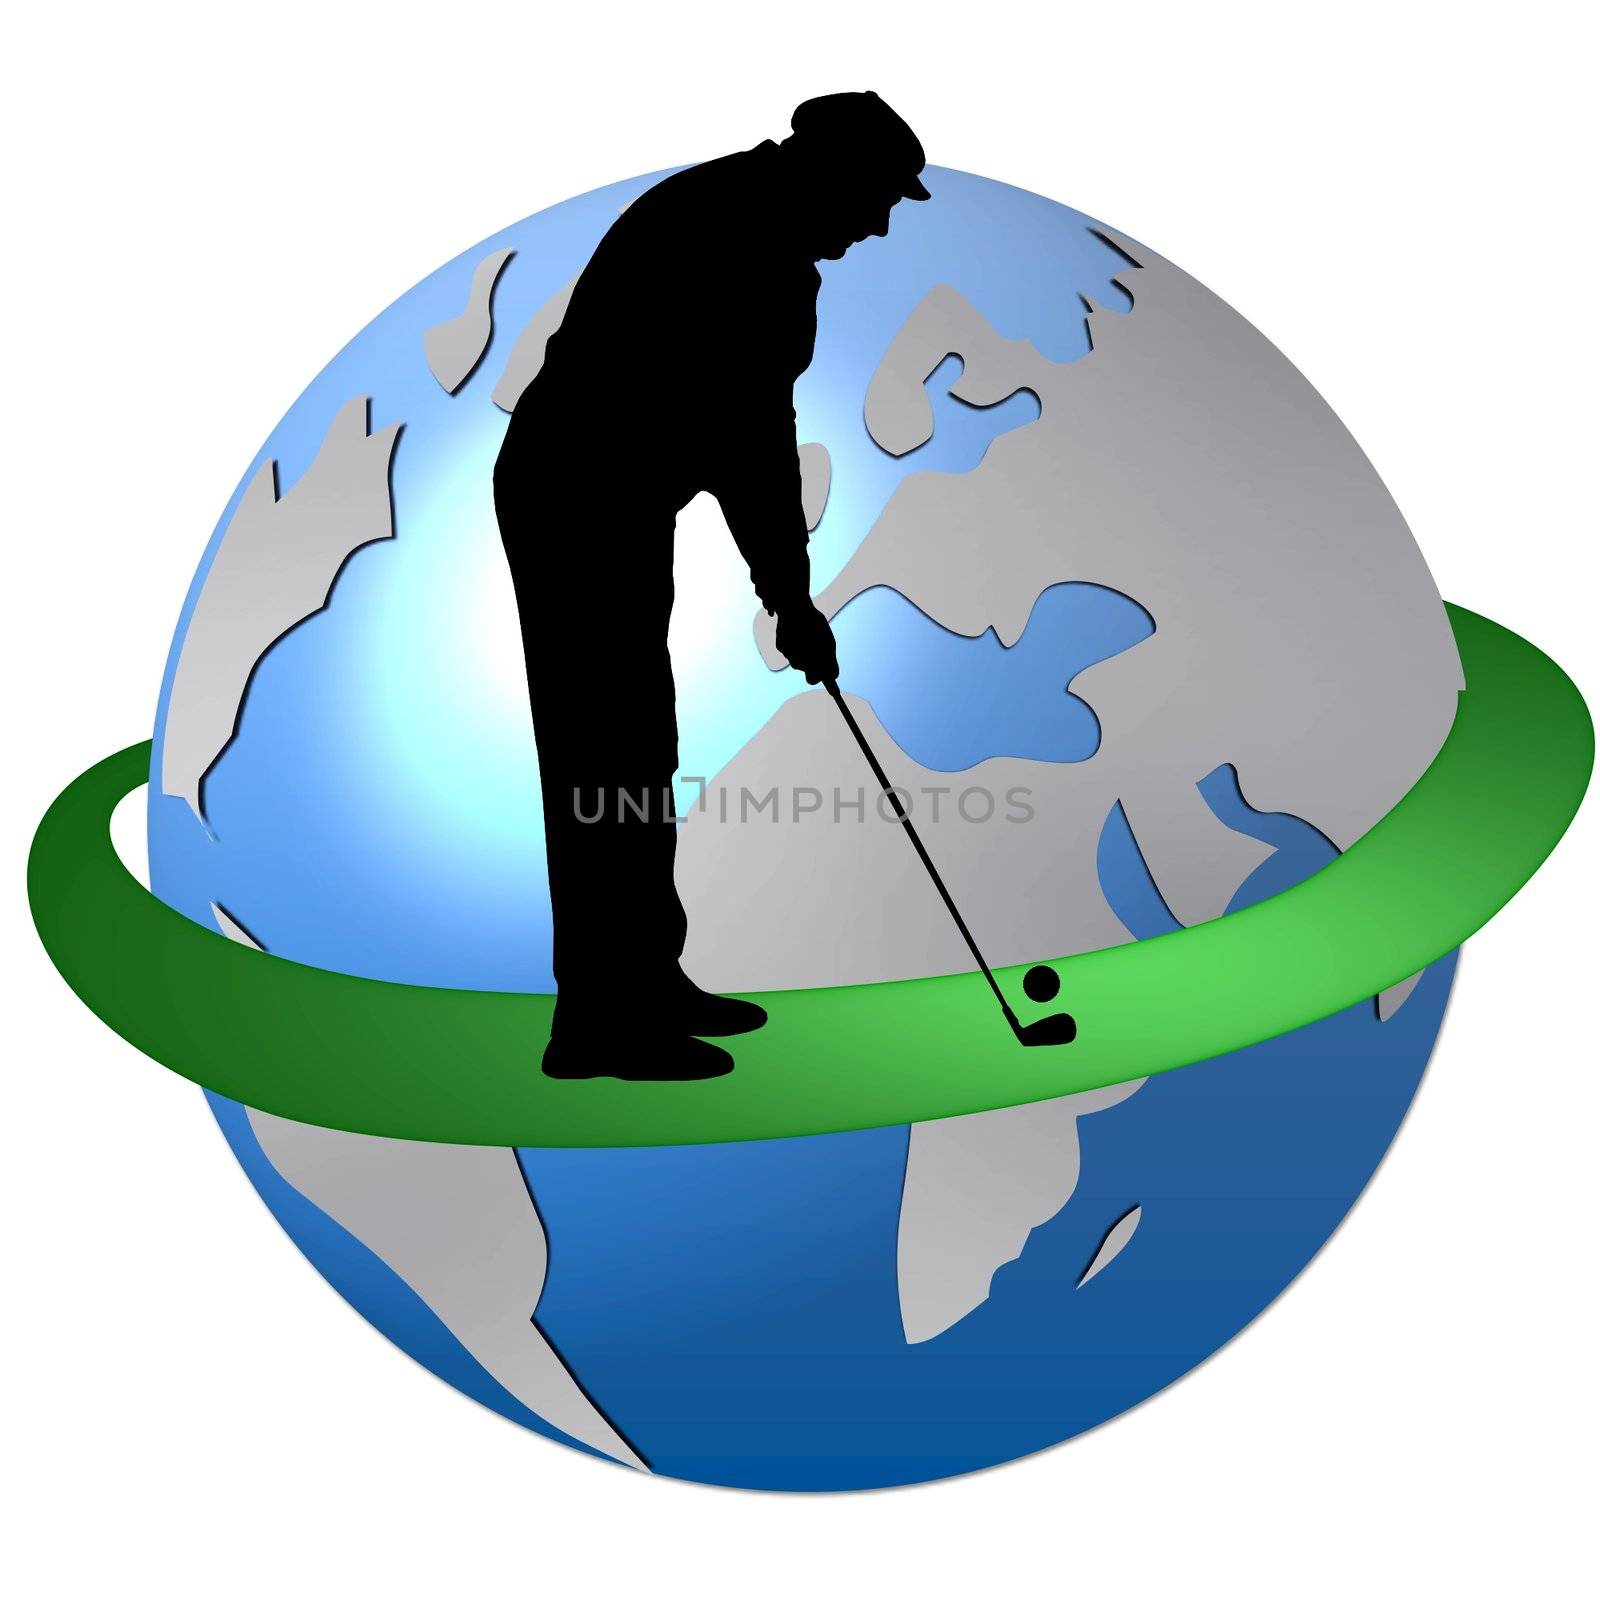 golf around the world

